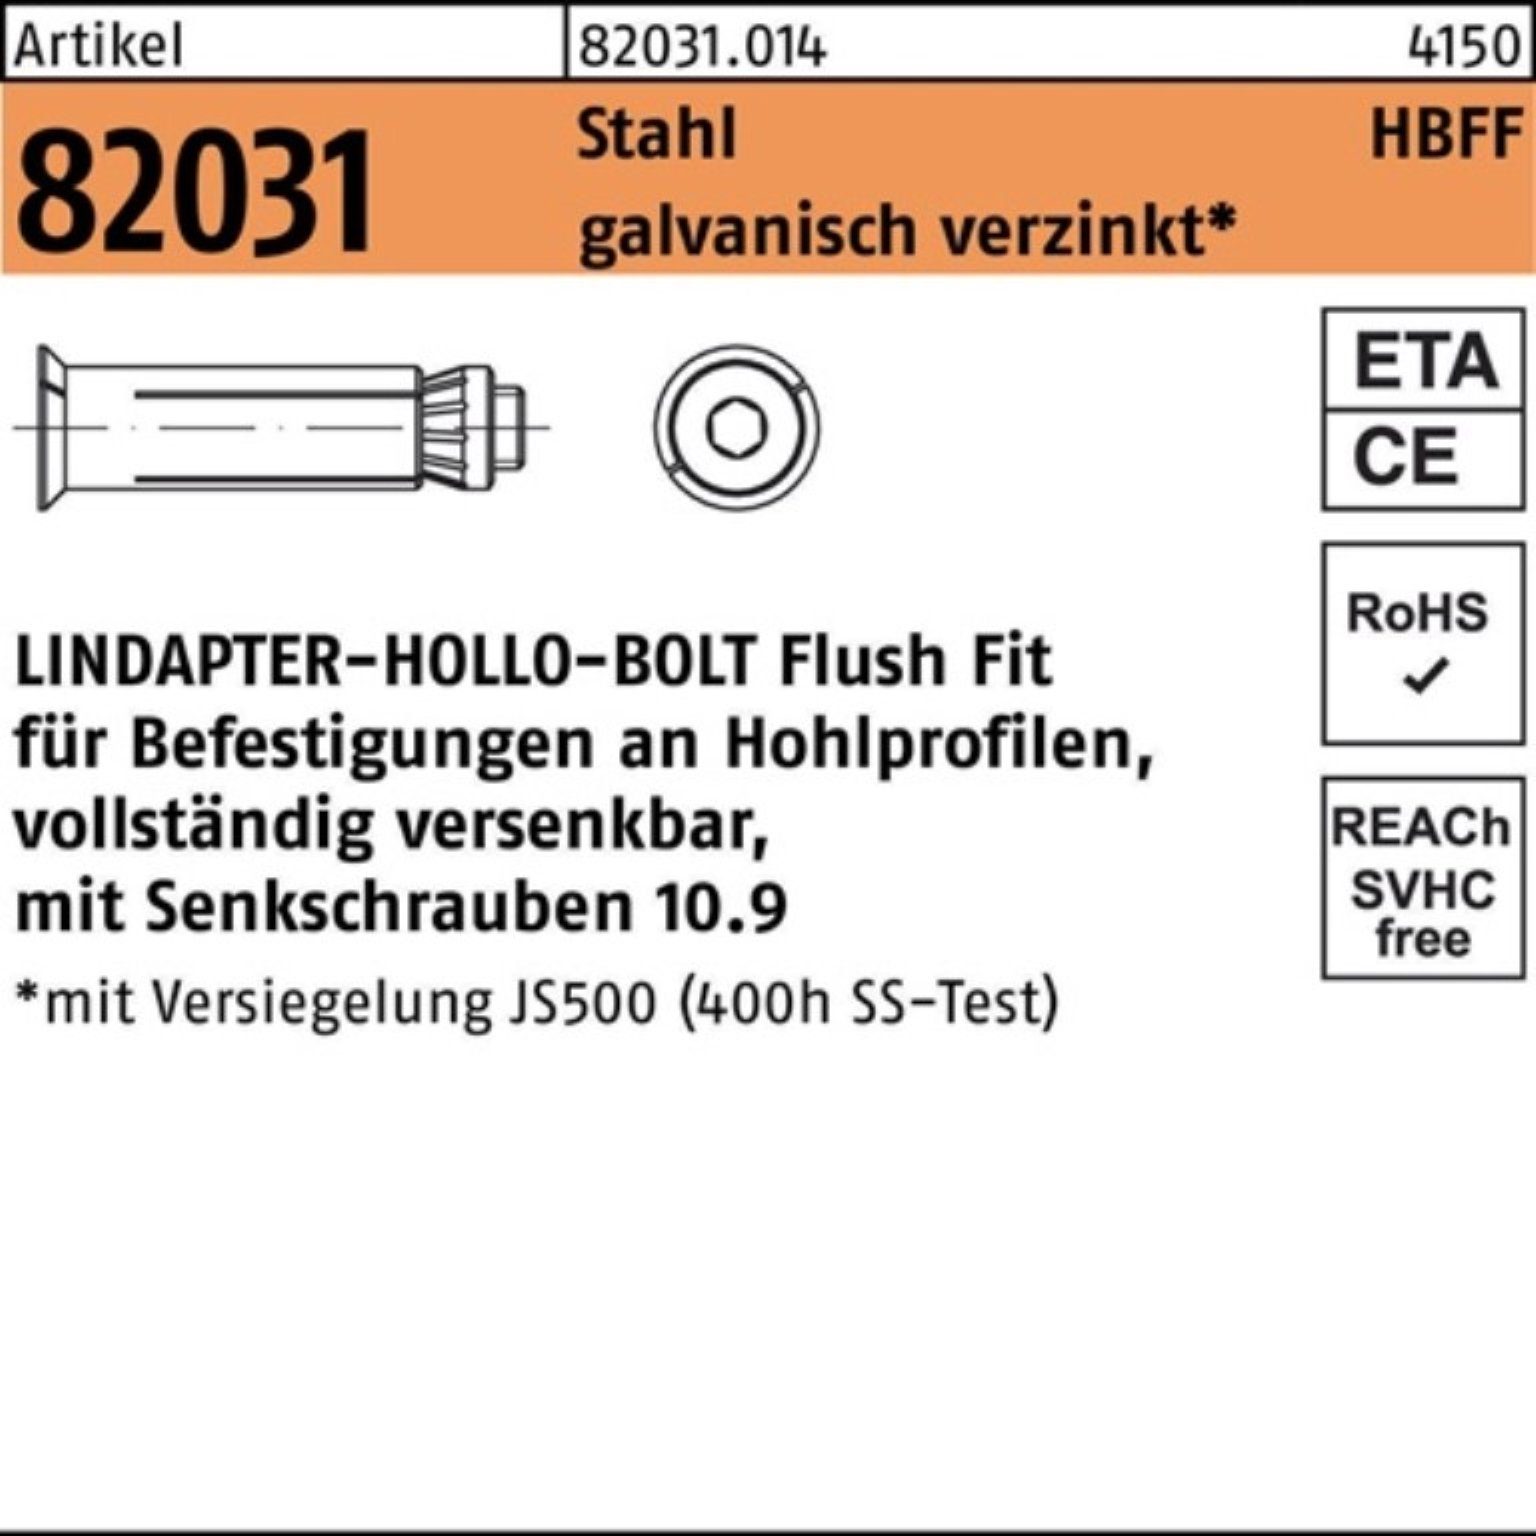 Pack 82031 Lindapter 12-3 HBFF R 100er Hohlraumdübel galv.verz. Hohlraumdübel 10.9 1 (100/74)